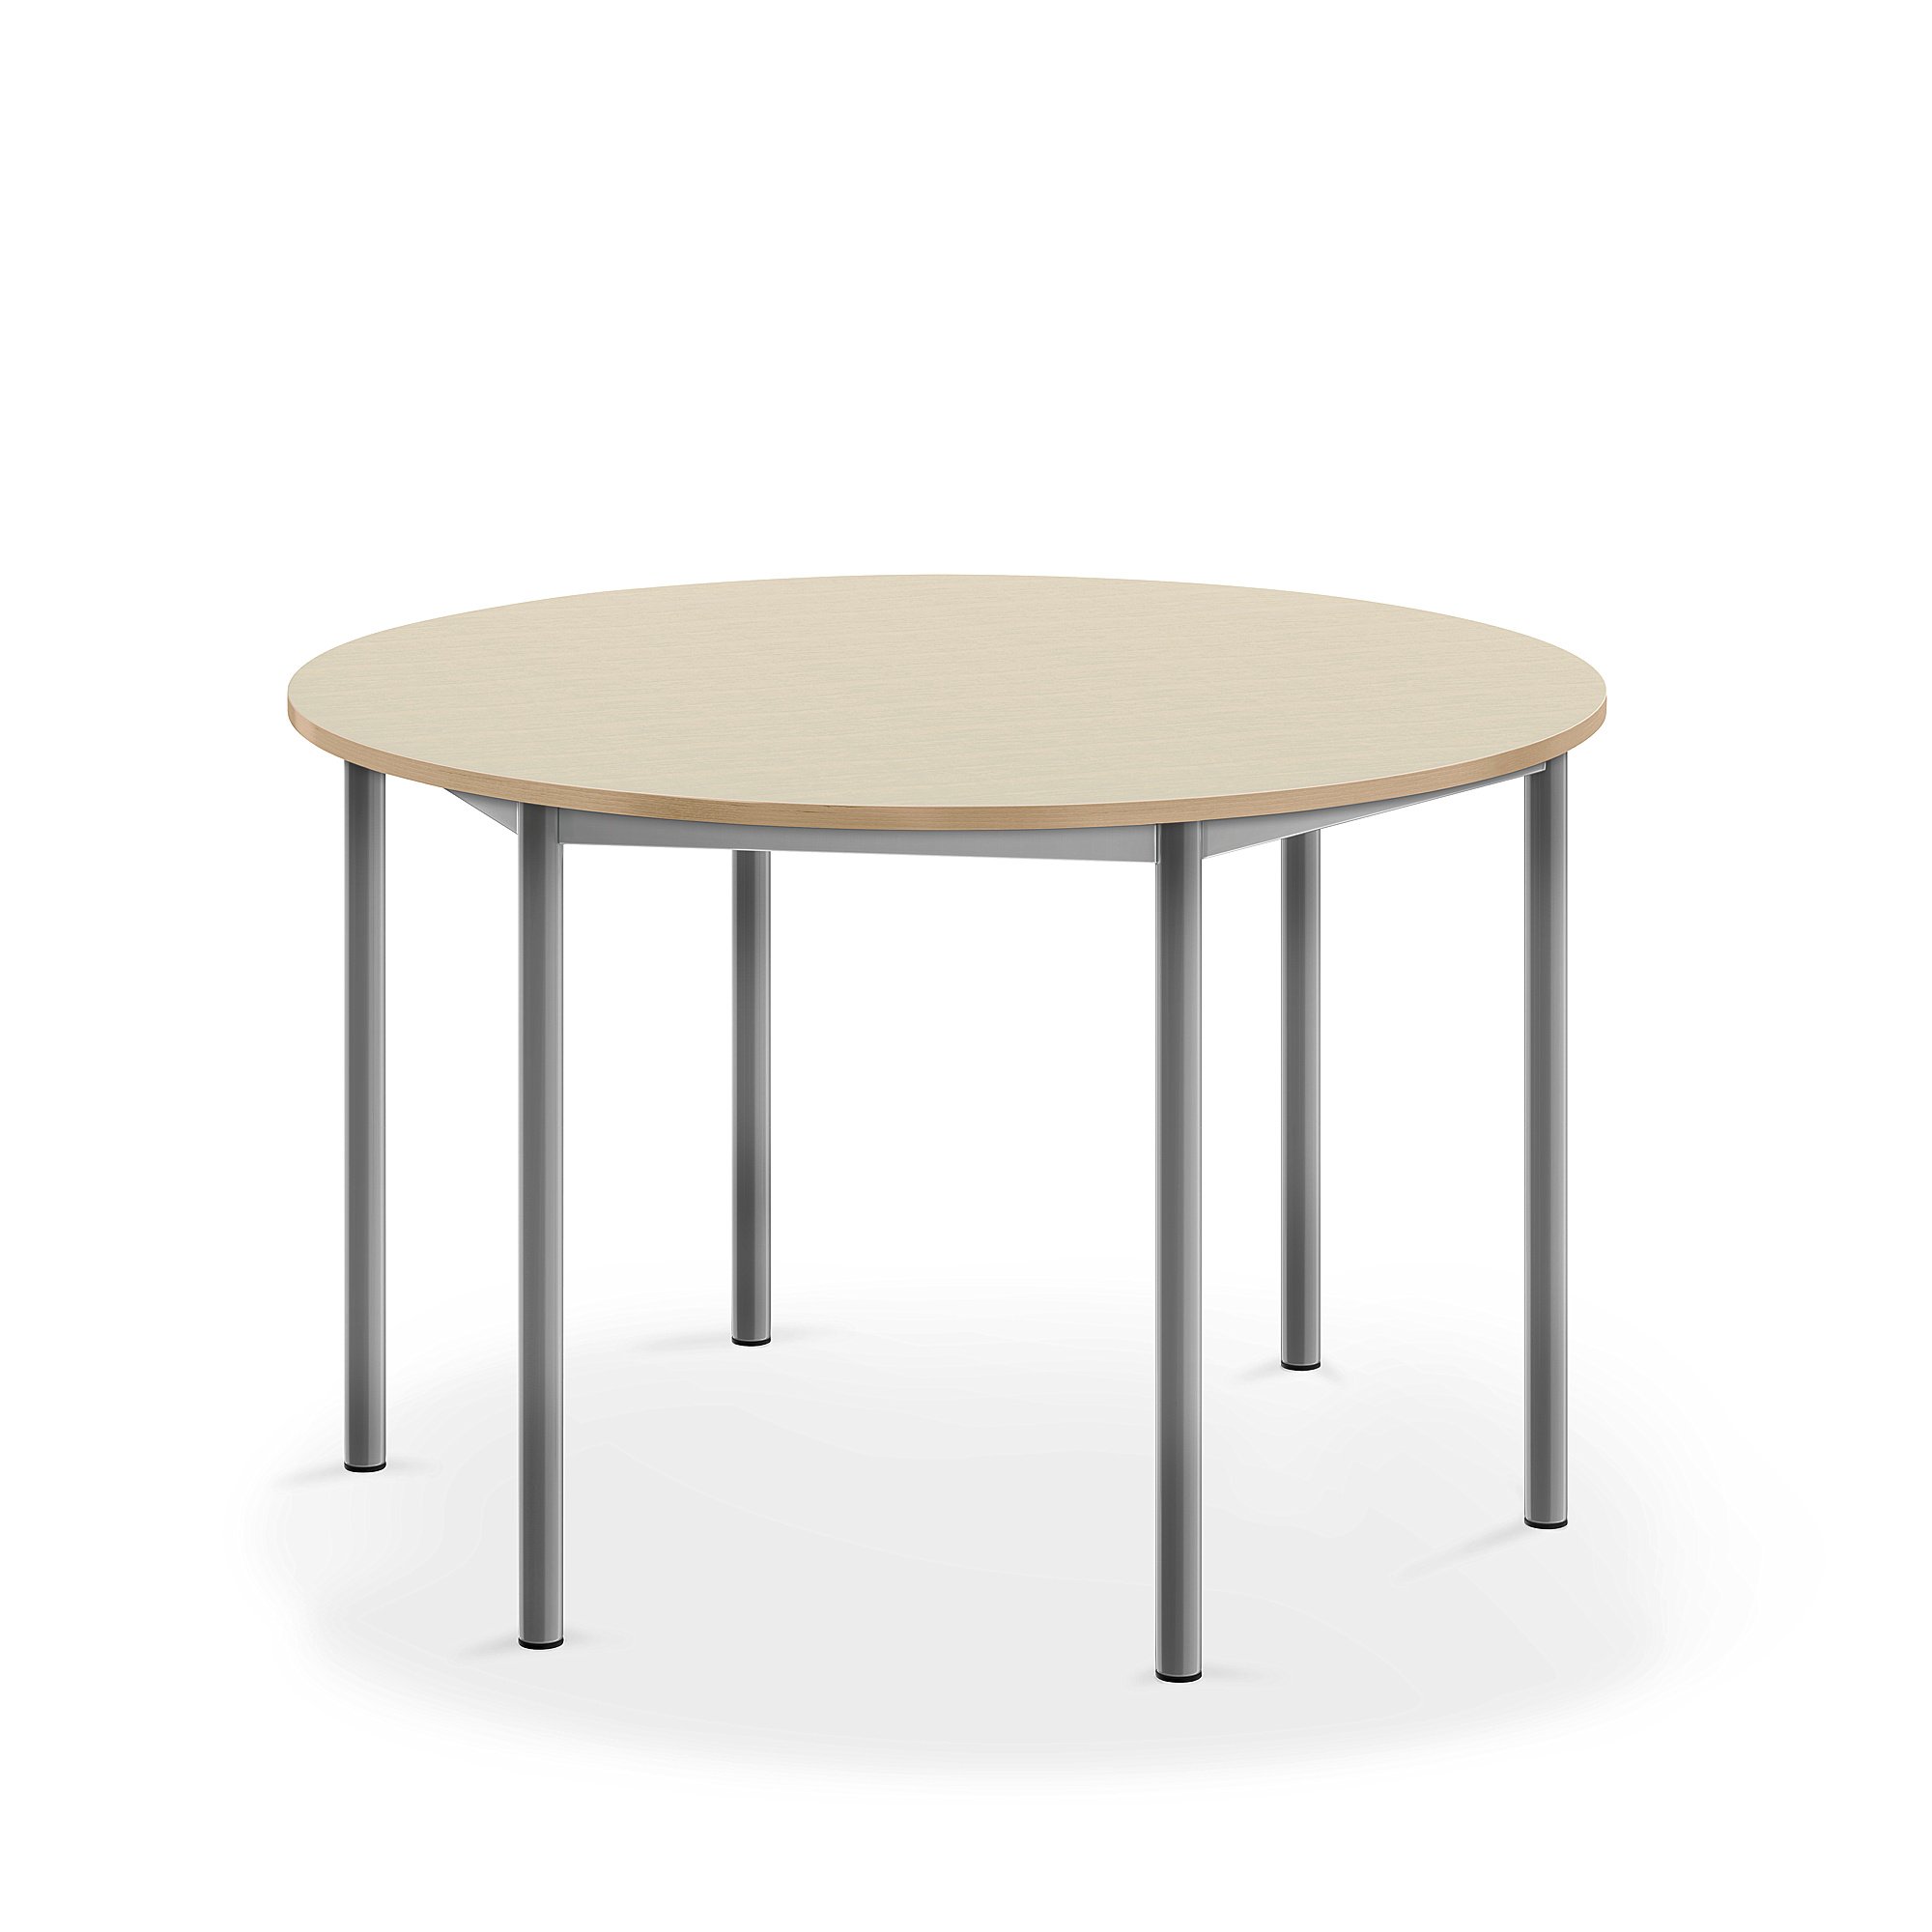 Stůl BORÅS, Ø1200x720 mm, stříbrné nohy, HPL deska, bříza